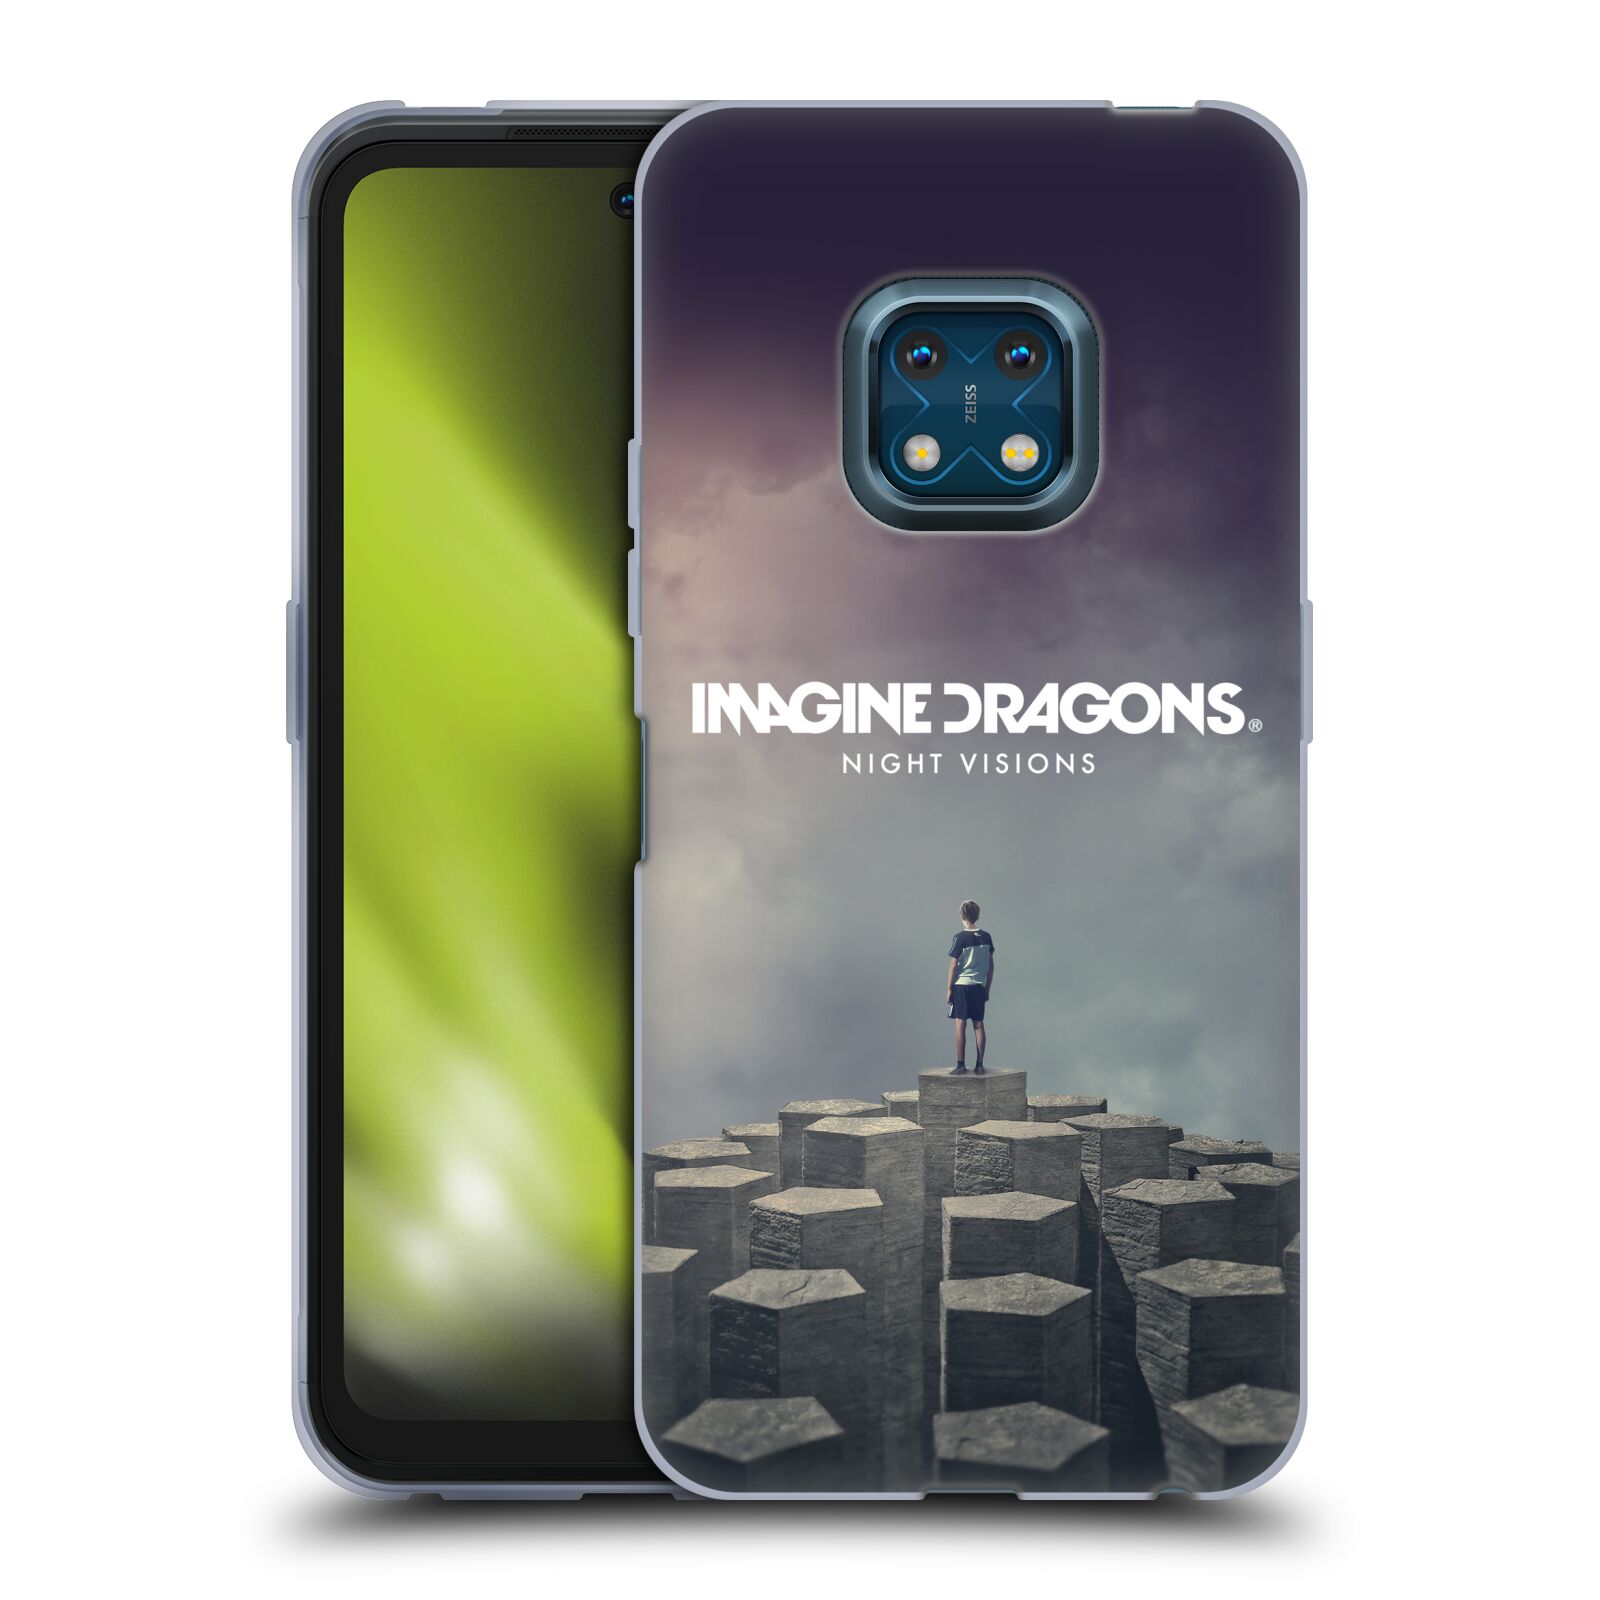 Silikonové pouzdro na mobil Nokia XR20 - Imagine Dragons - Night Visions